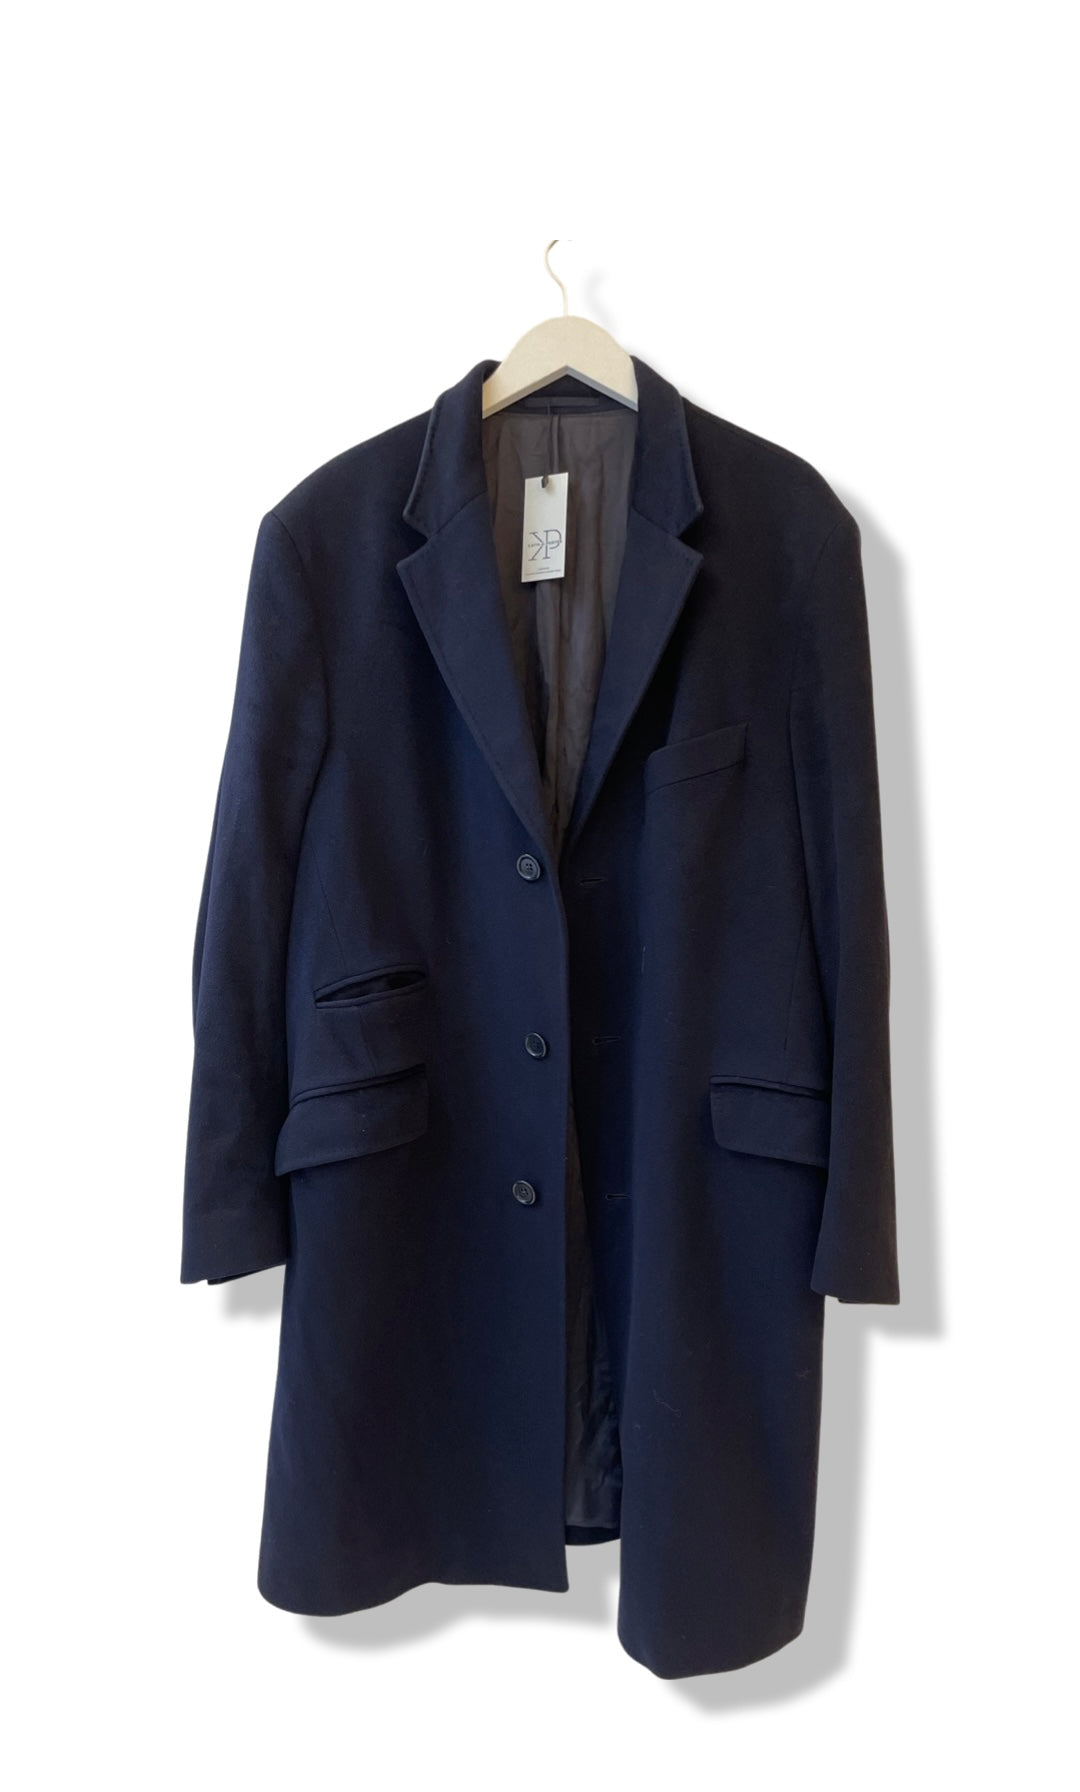 Navy blue cashmere wool coat.